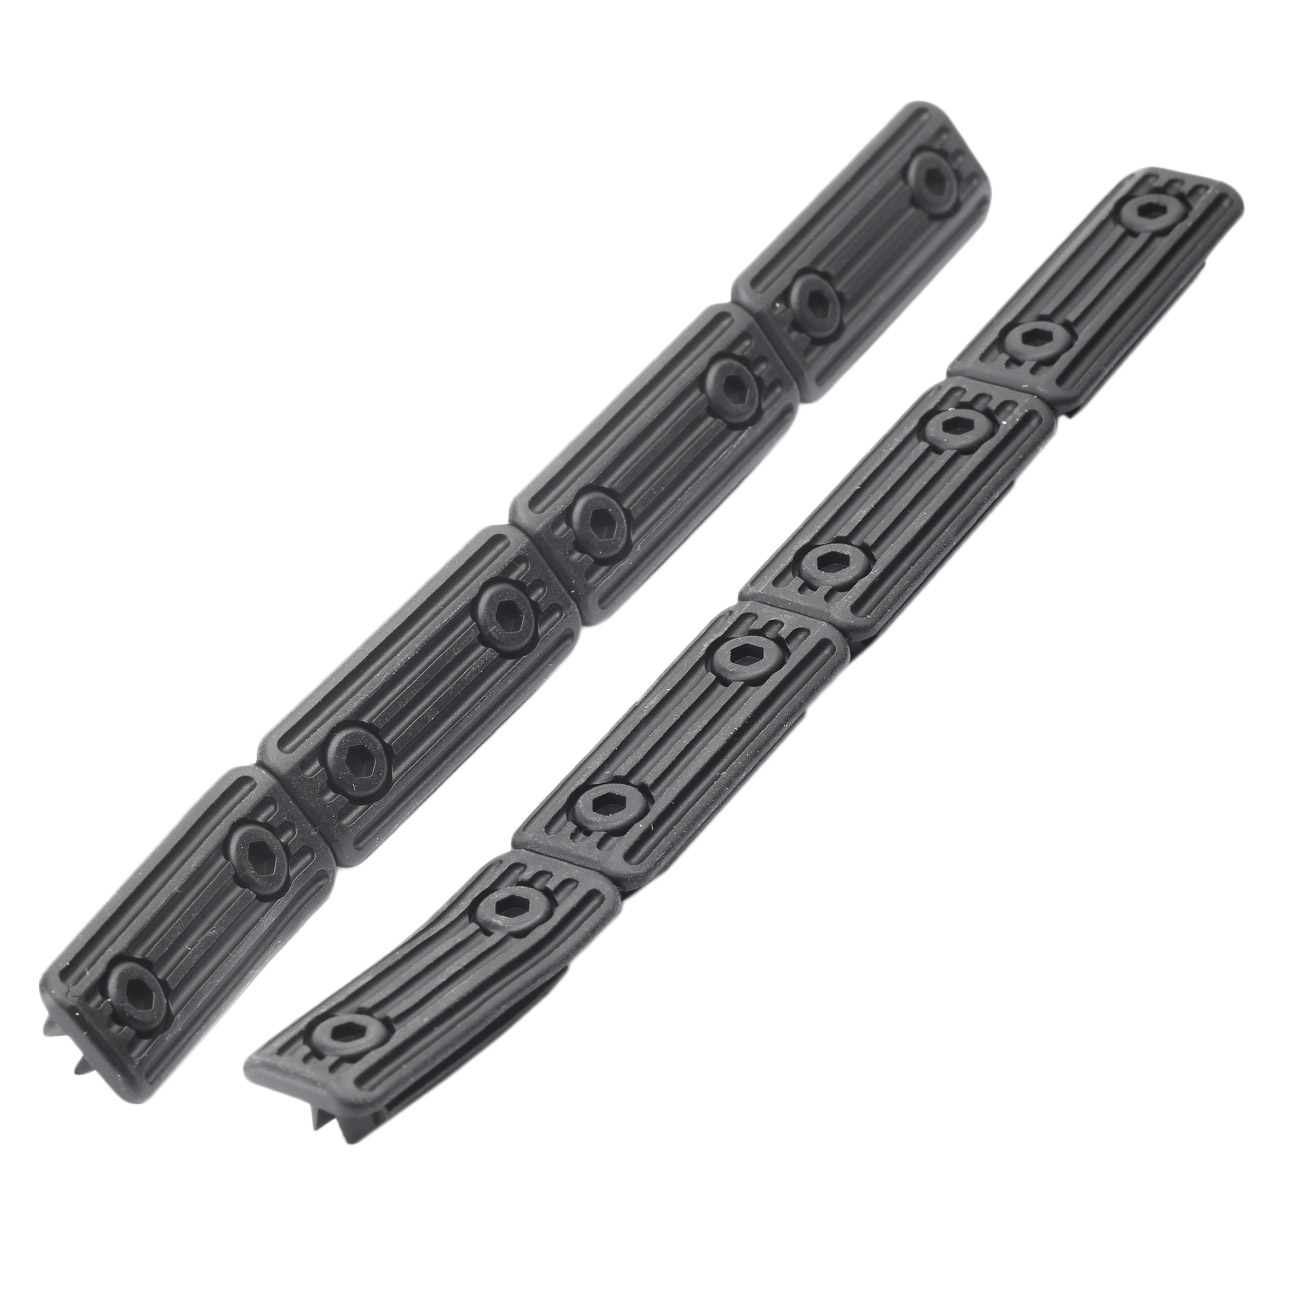 VFC M-Lok Gummi Rail Panel / Rail Covers Kit (2 Stück) schwarz Bild 1